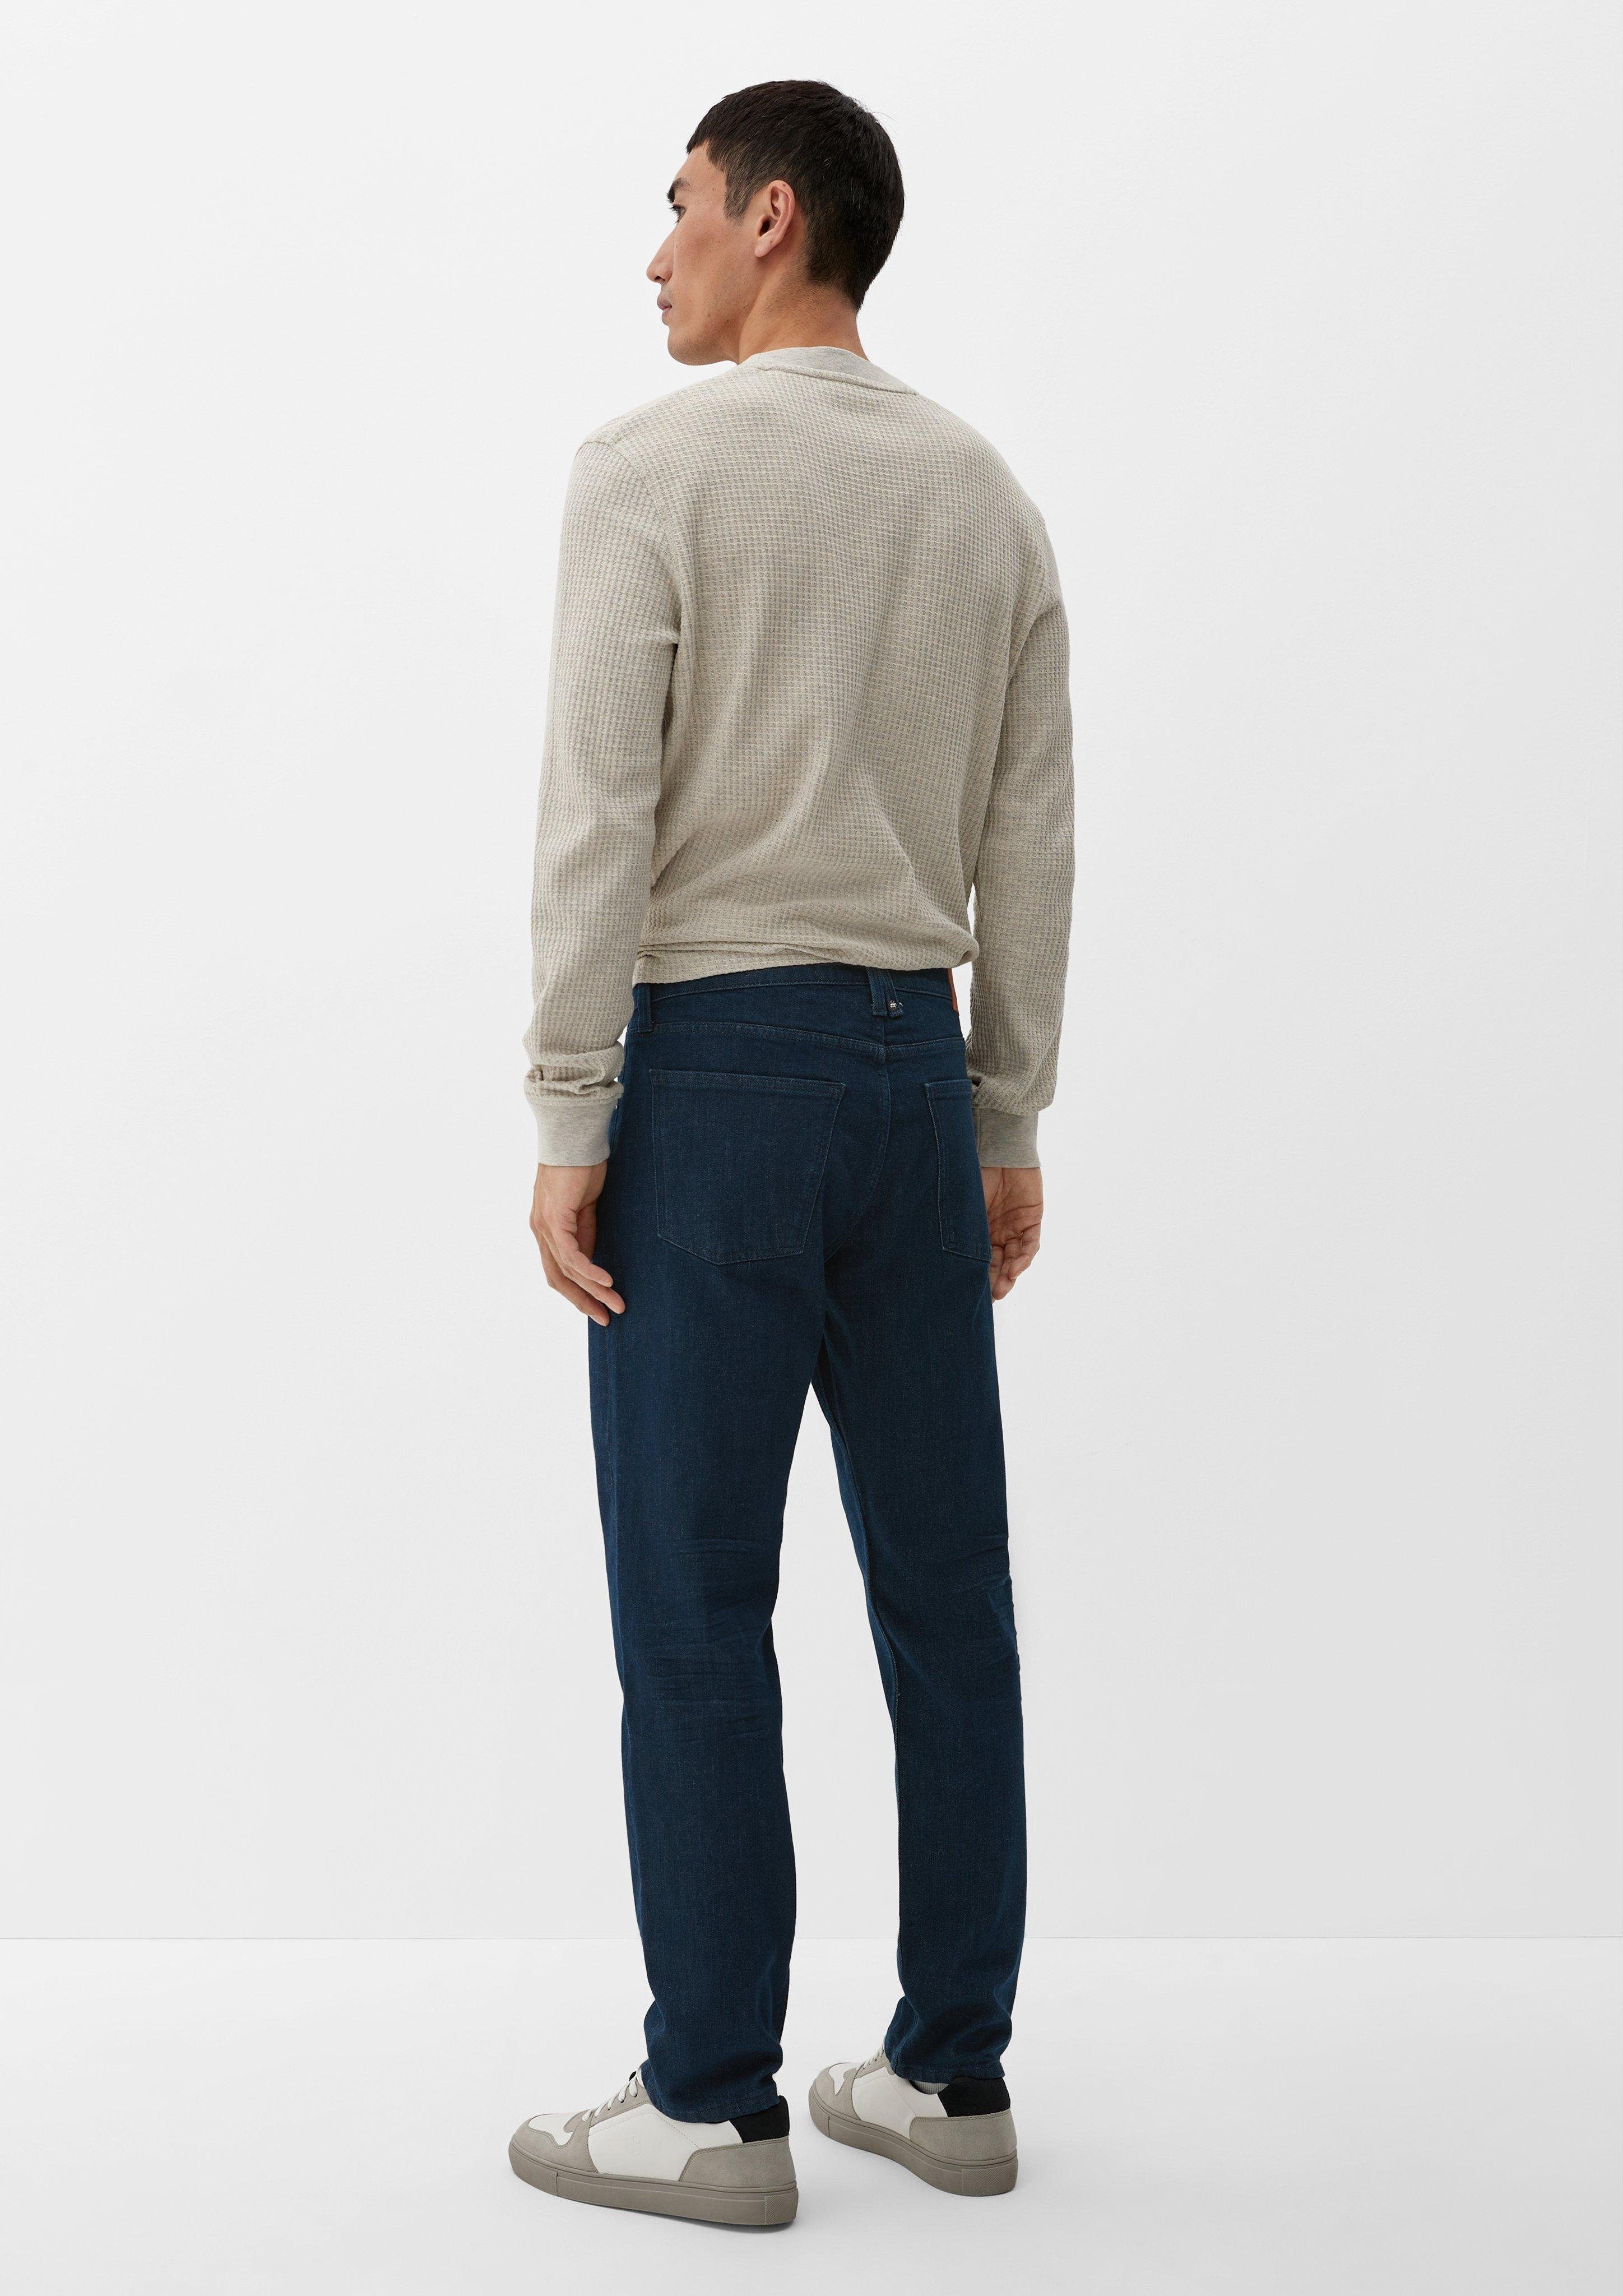 Waschung s.Oliver / Slim Rise High Stoffhose Jeans Fit Leg / dunkelblau Regular /